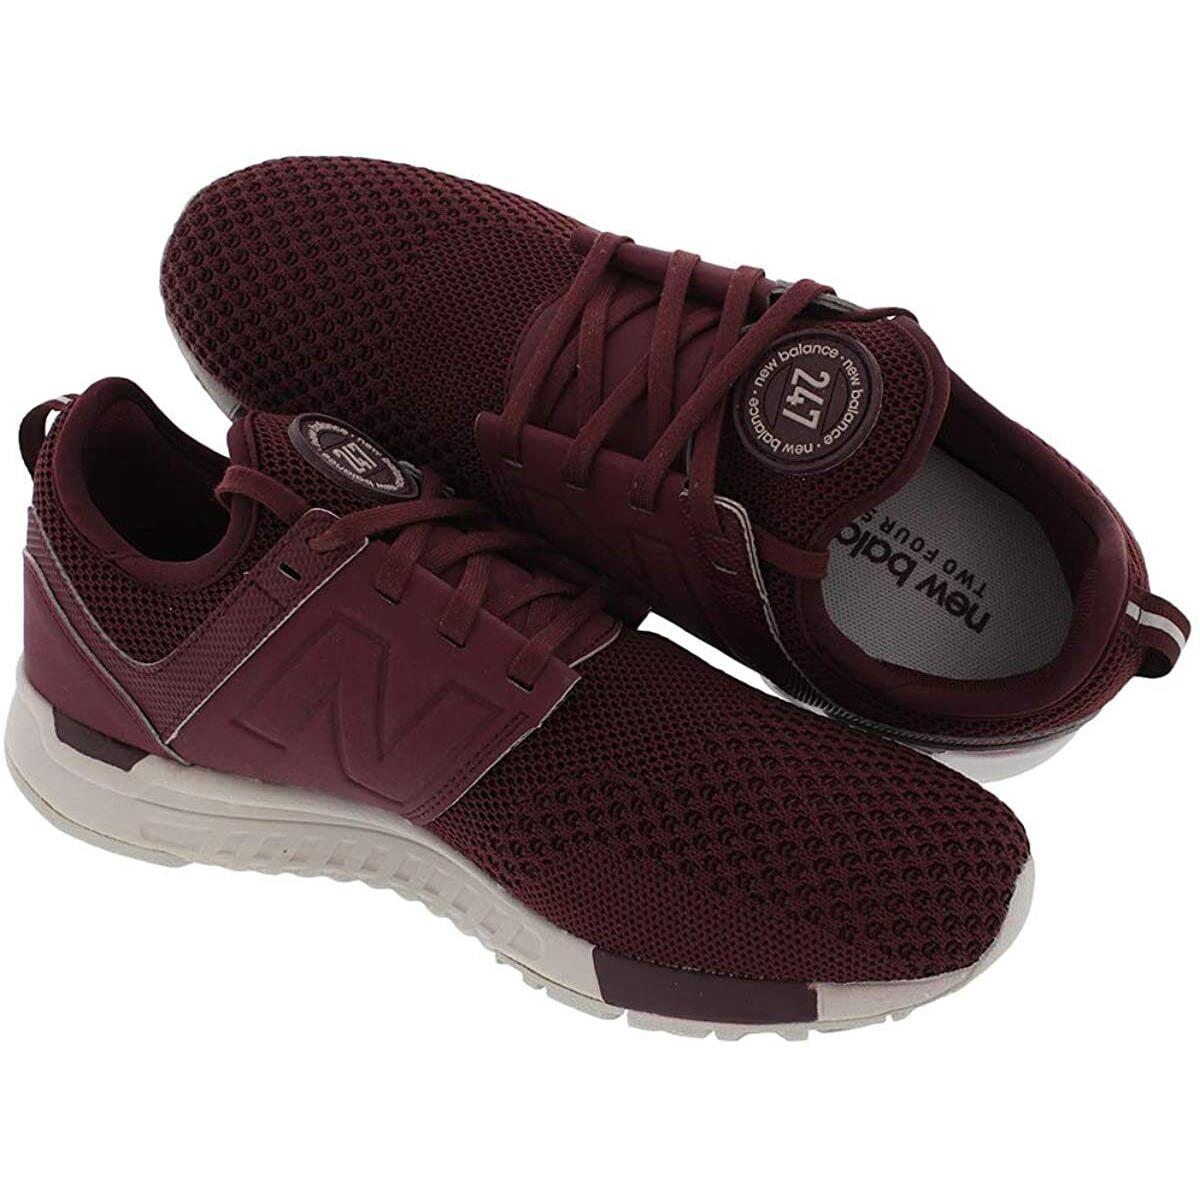 New Balance Lifestyle 247 Sport Men`s Shoes - MRL247W0 - Buo - Size 9 - Manufacturer: